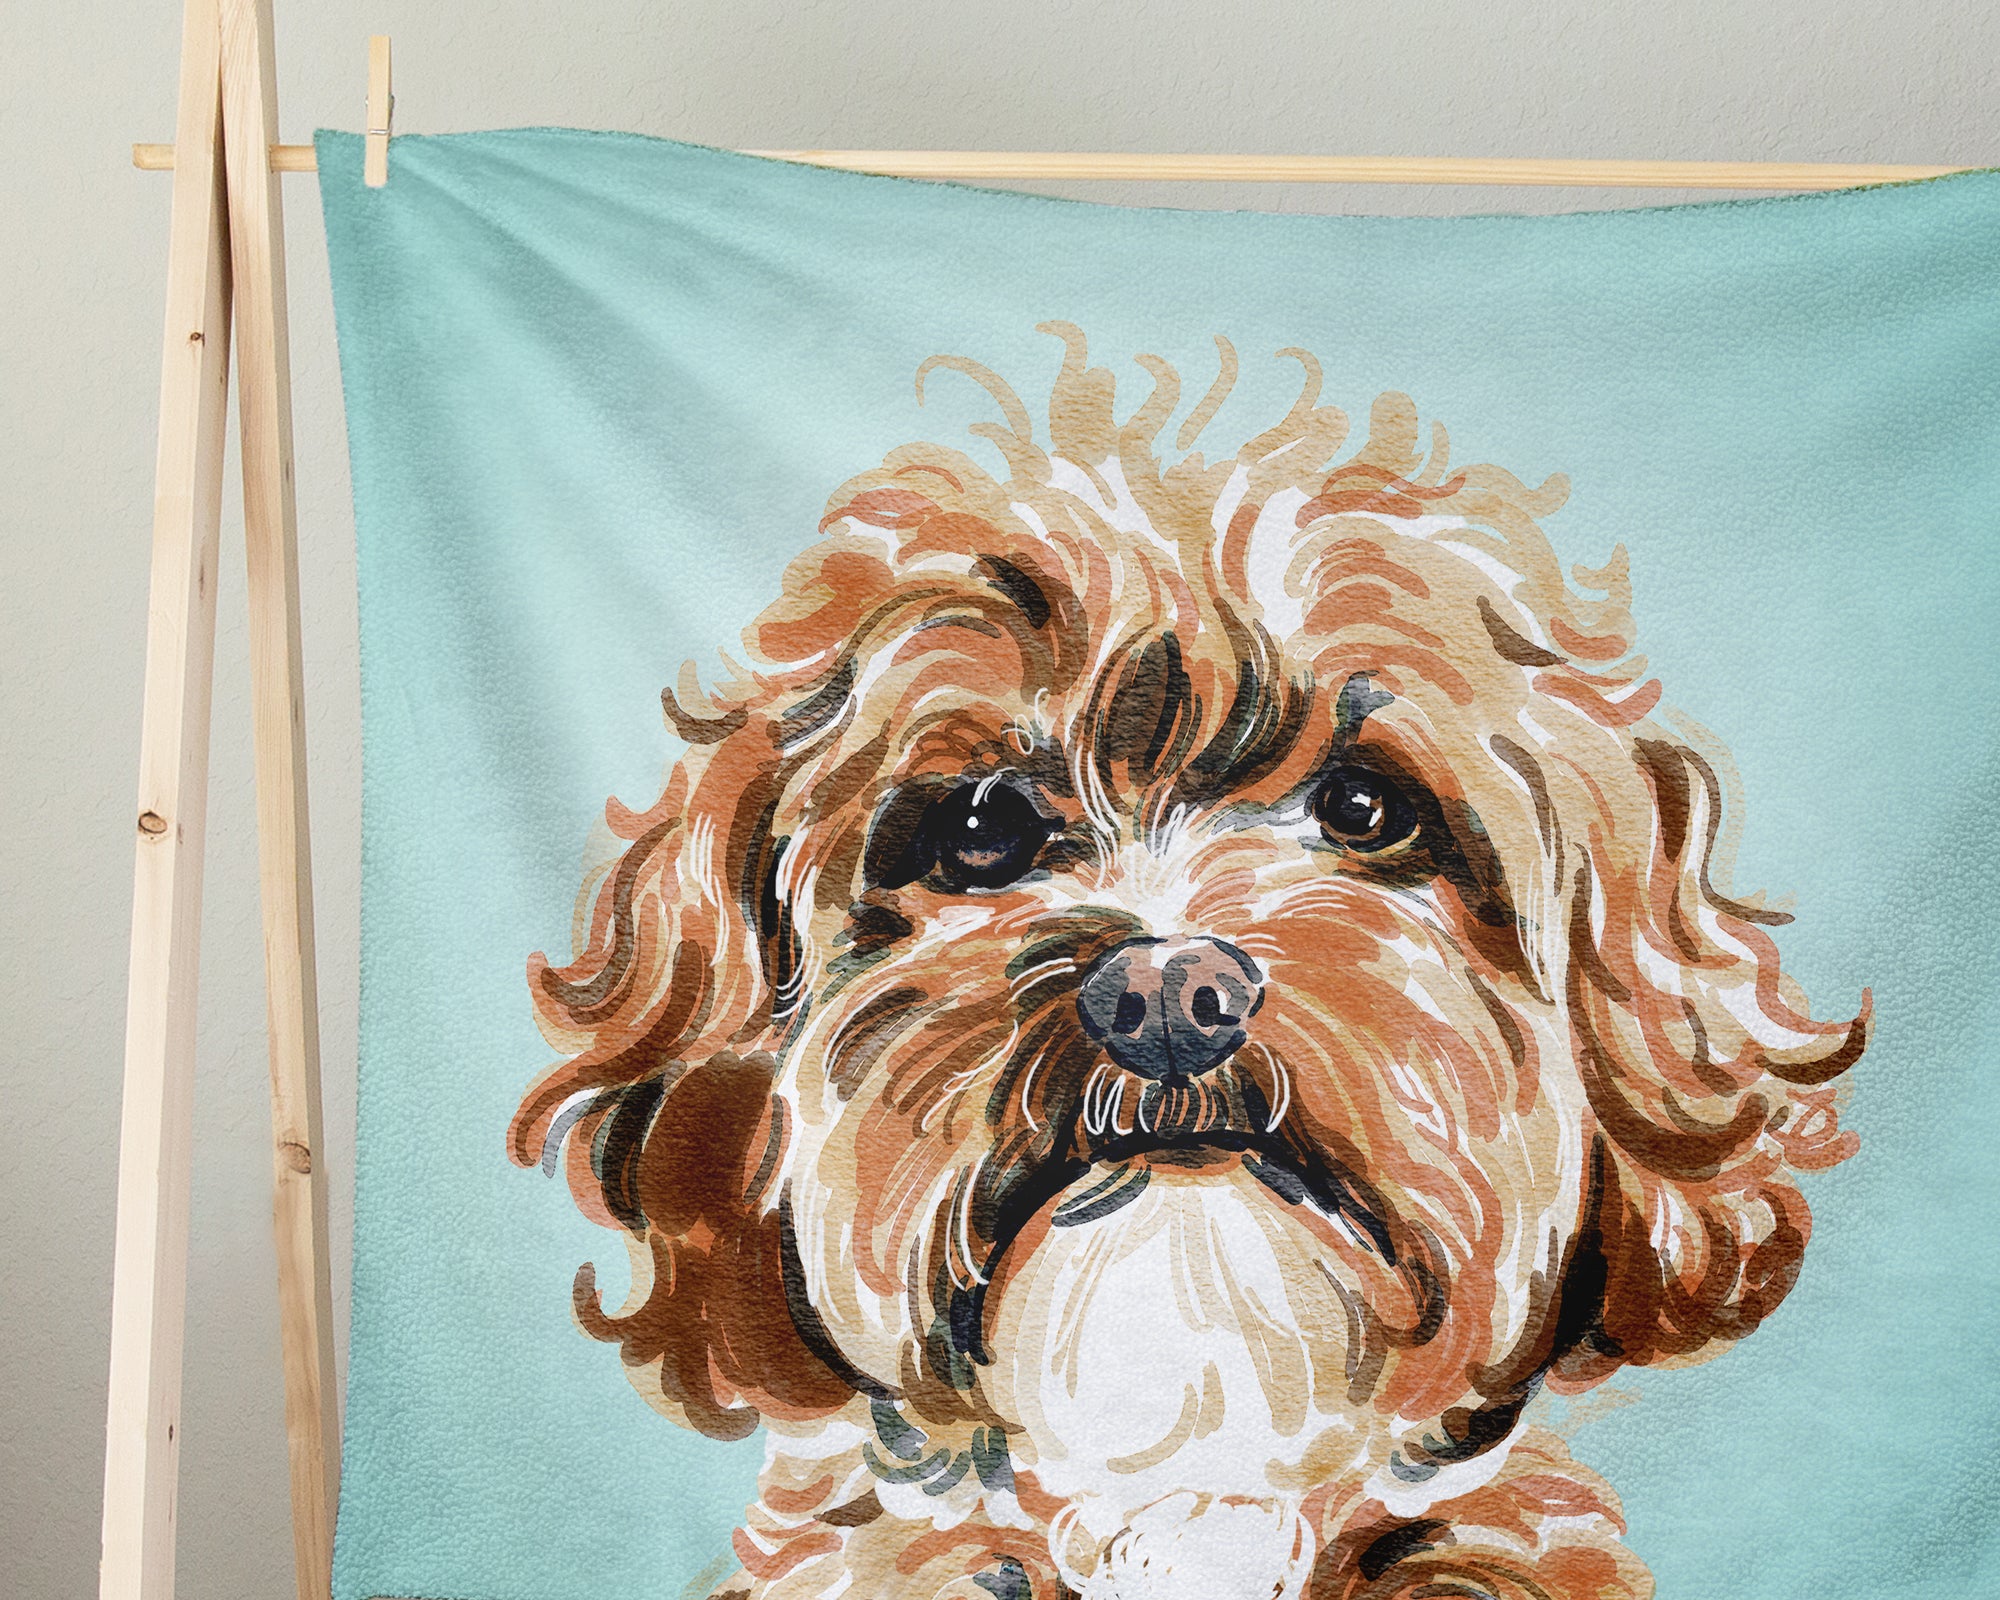 Custom Pet Blanket (Watercolor Portrait)